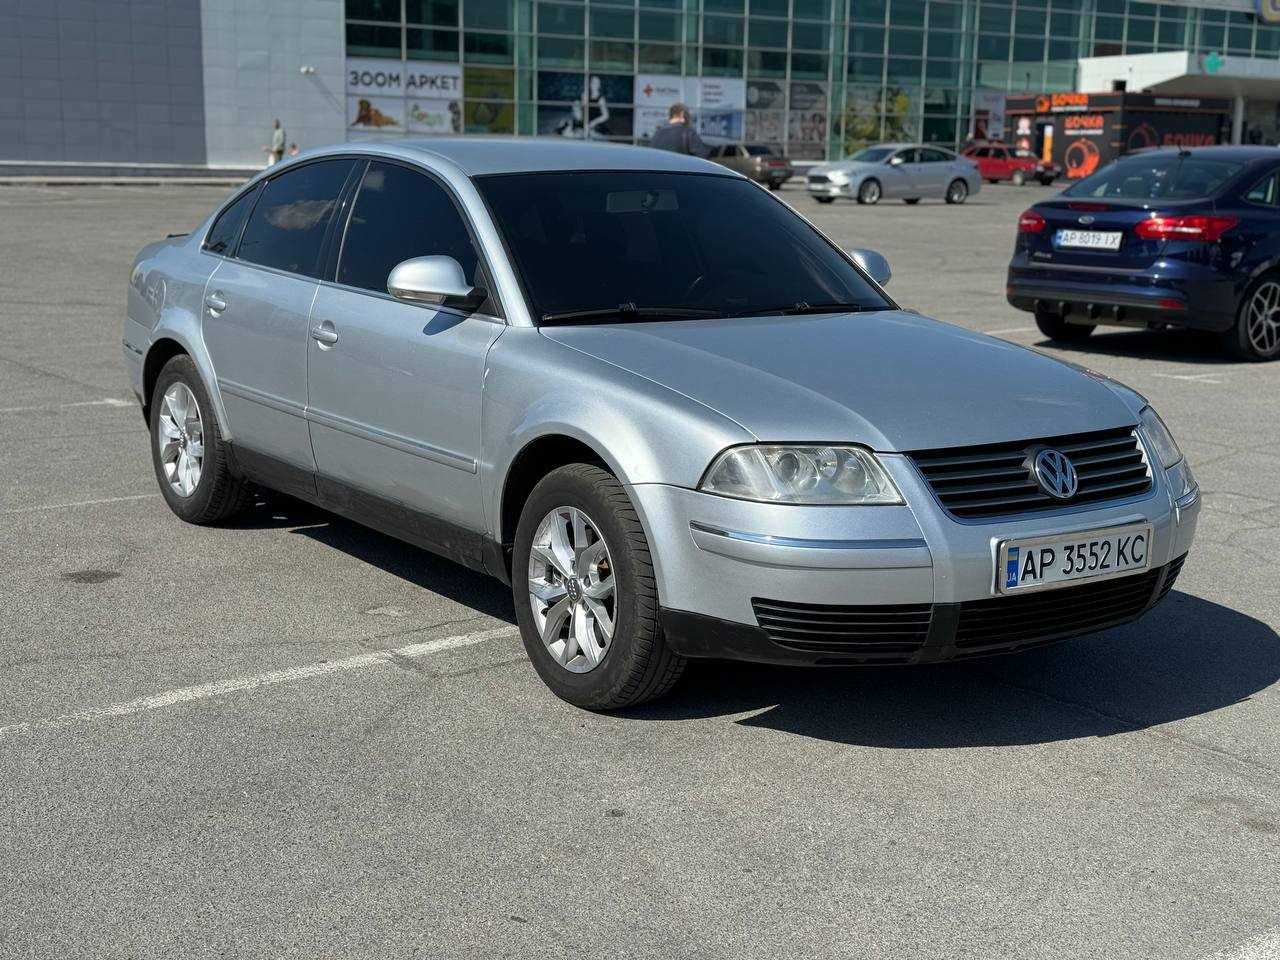 Volkswagen Passat B5+ 2005 2.8 Бензин Обмін/Розстрочка п внесок 1100$